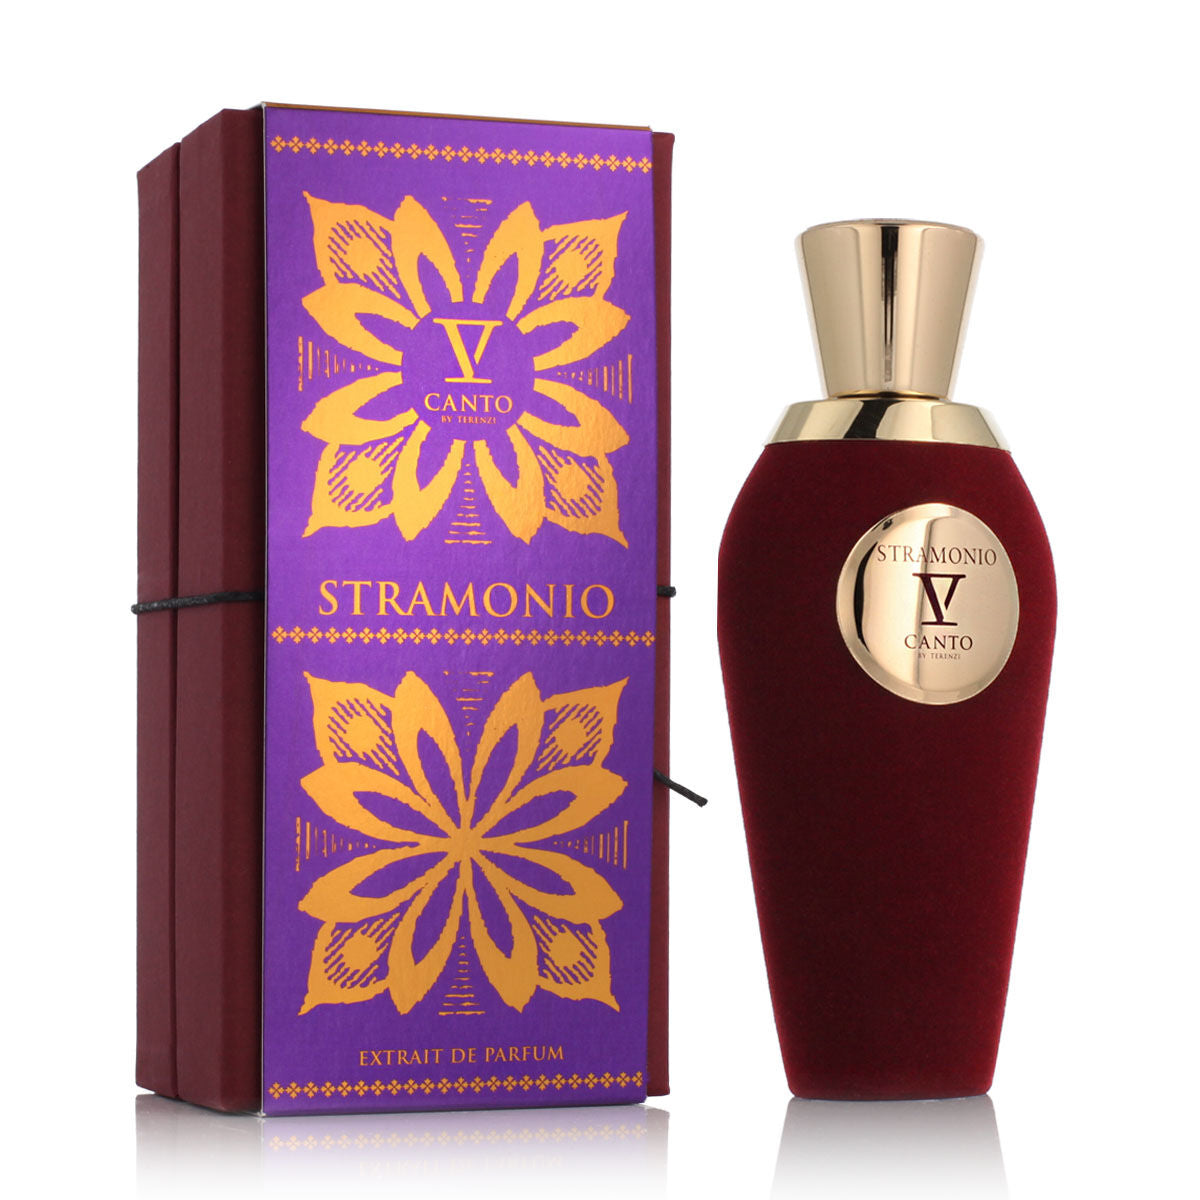 Uniseks Parfum V Canto Stramonio 100 ml